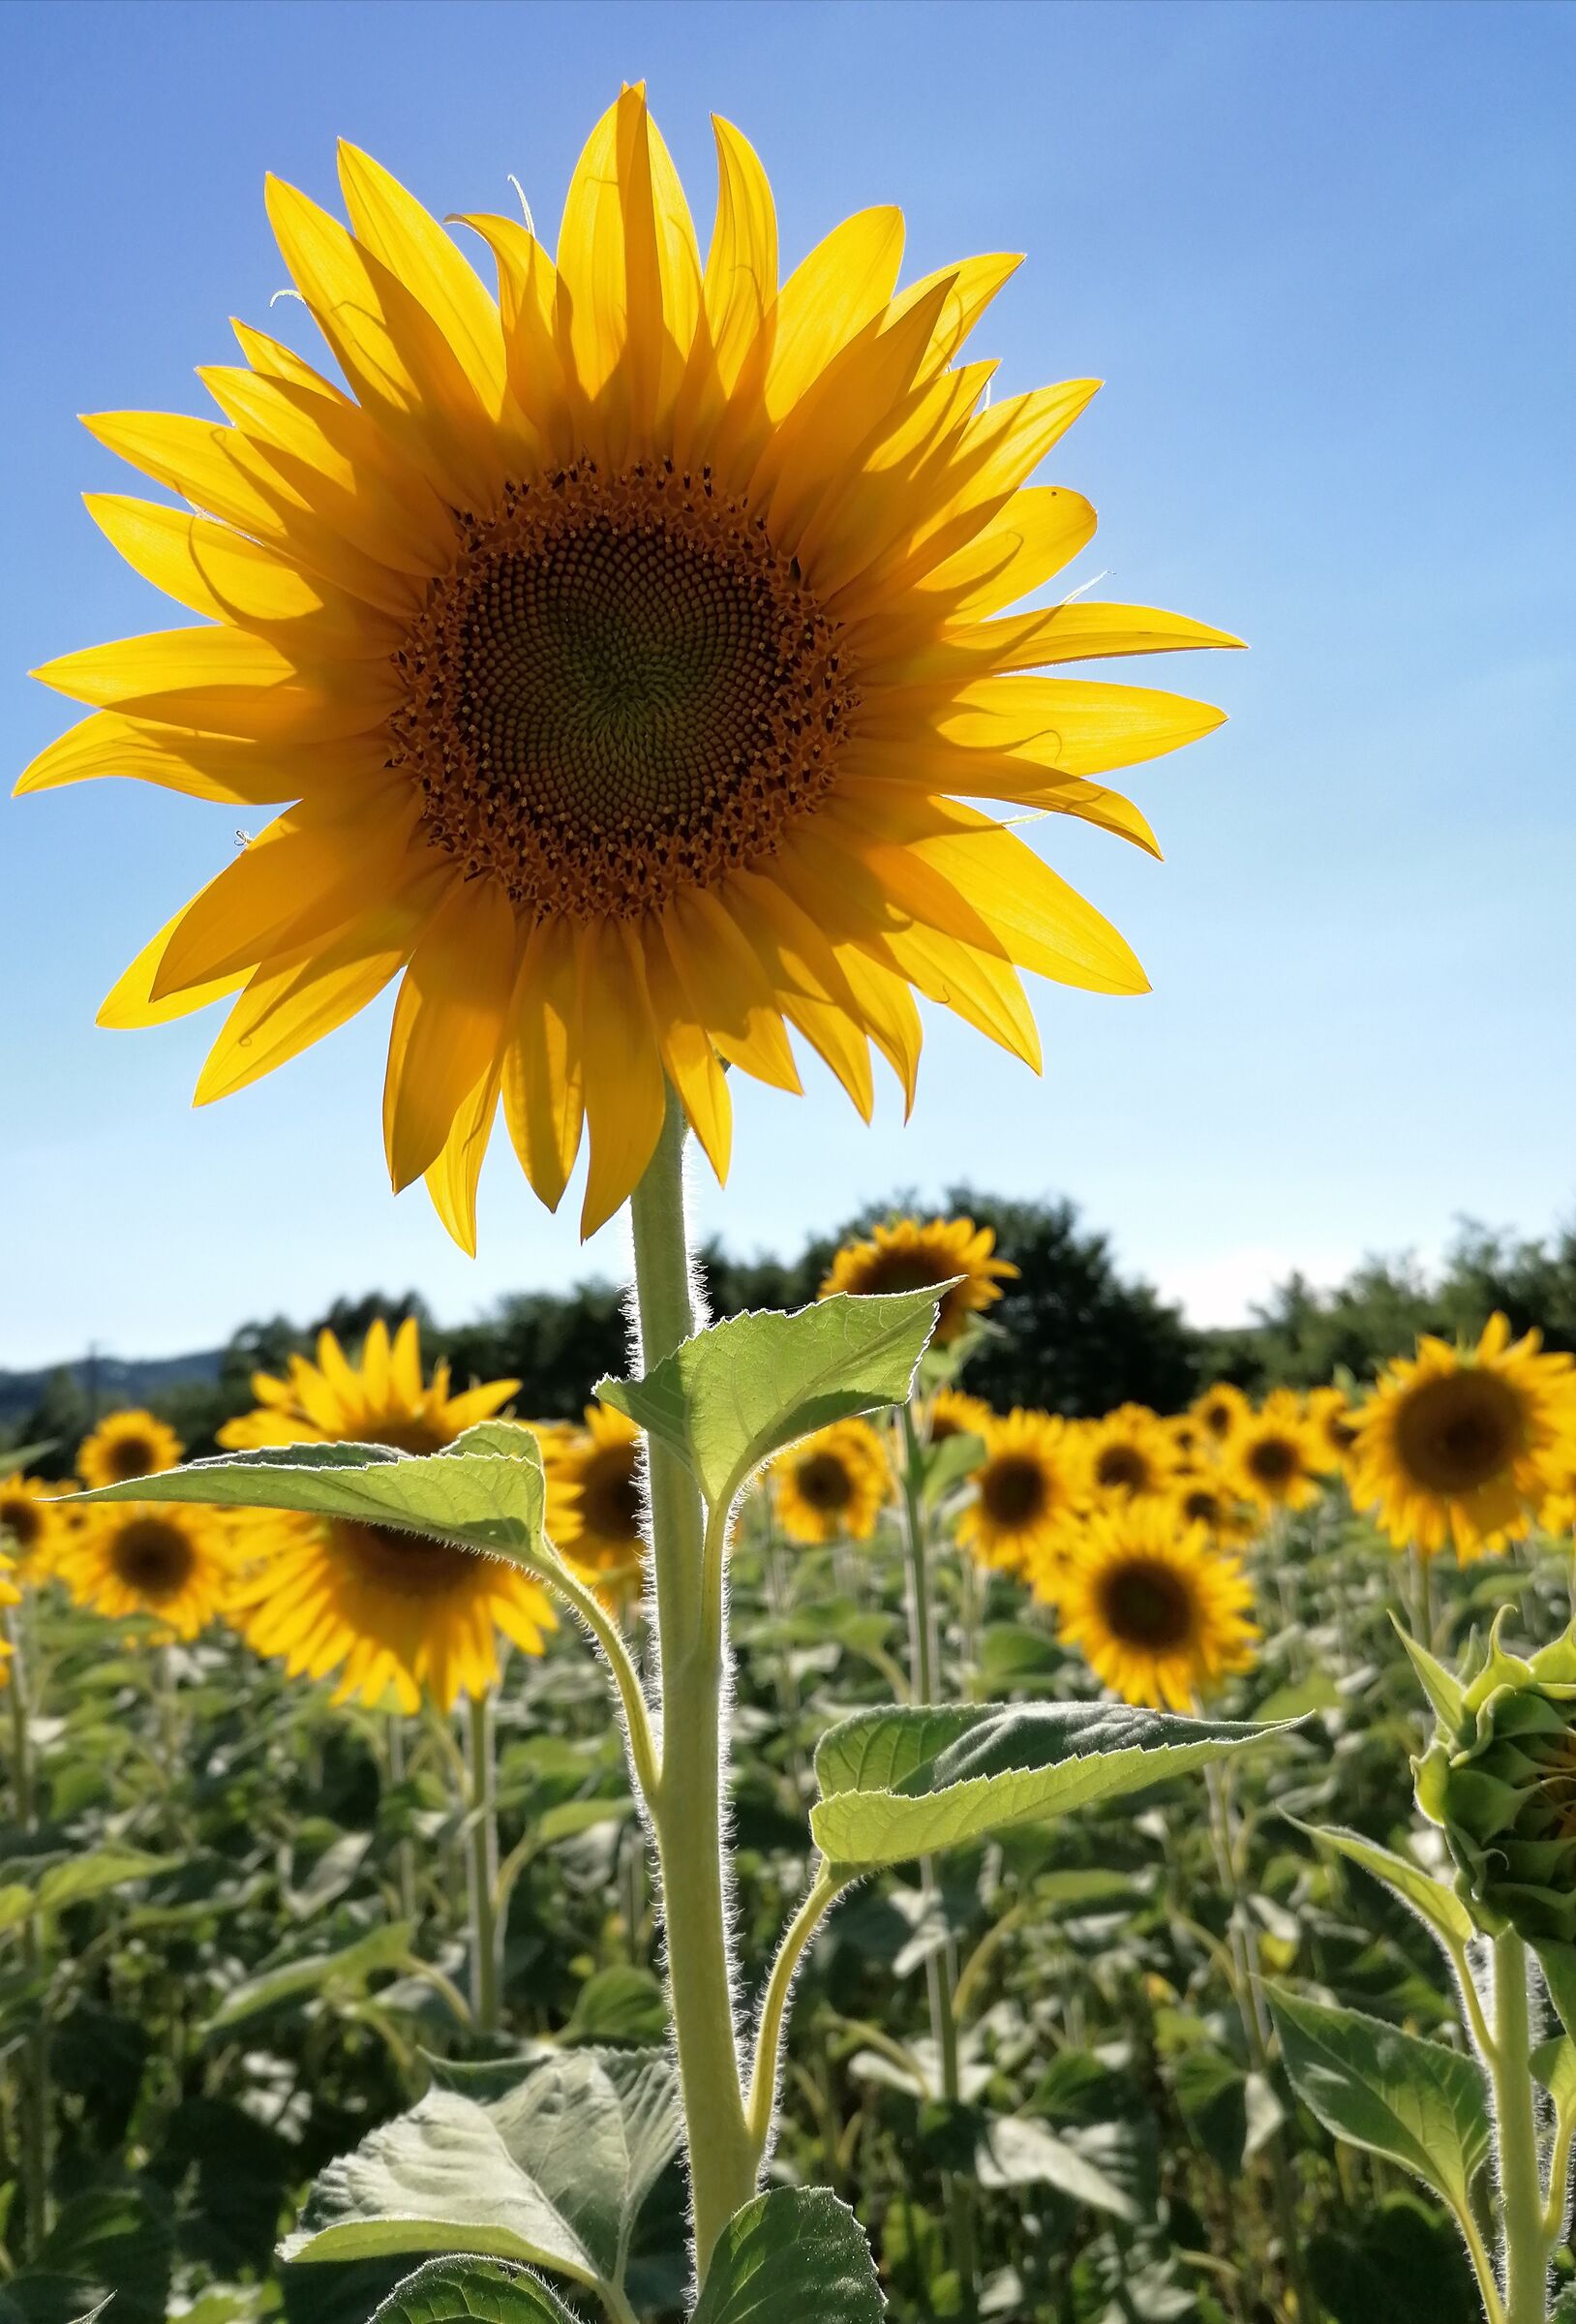 Sunflower in versus light...